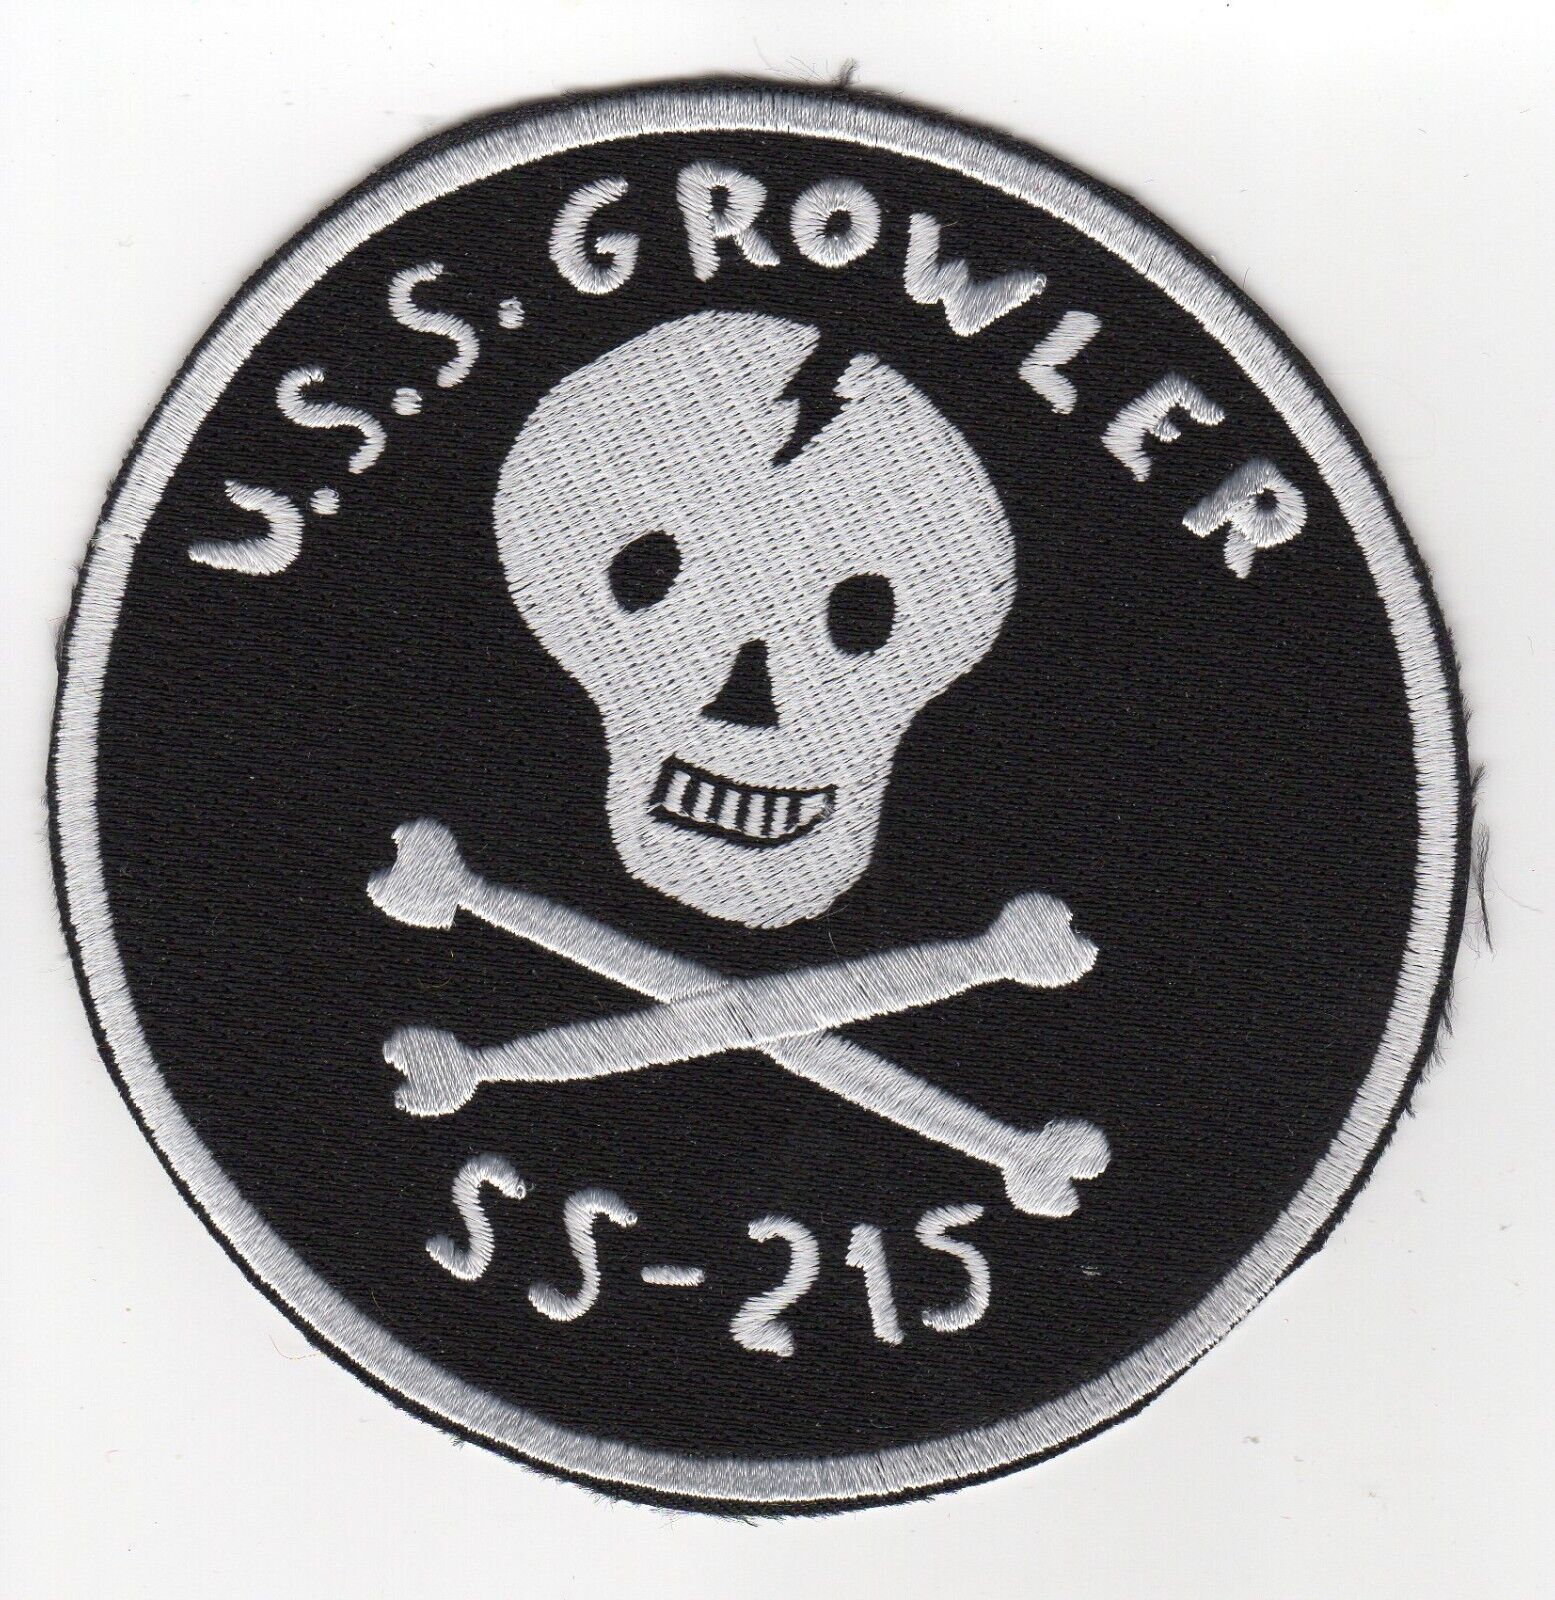 USS Growler SS 215 - Skull & Cross Bones  5 inch FE - BCP b814 Submarine Patch